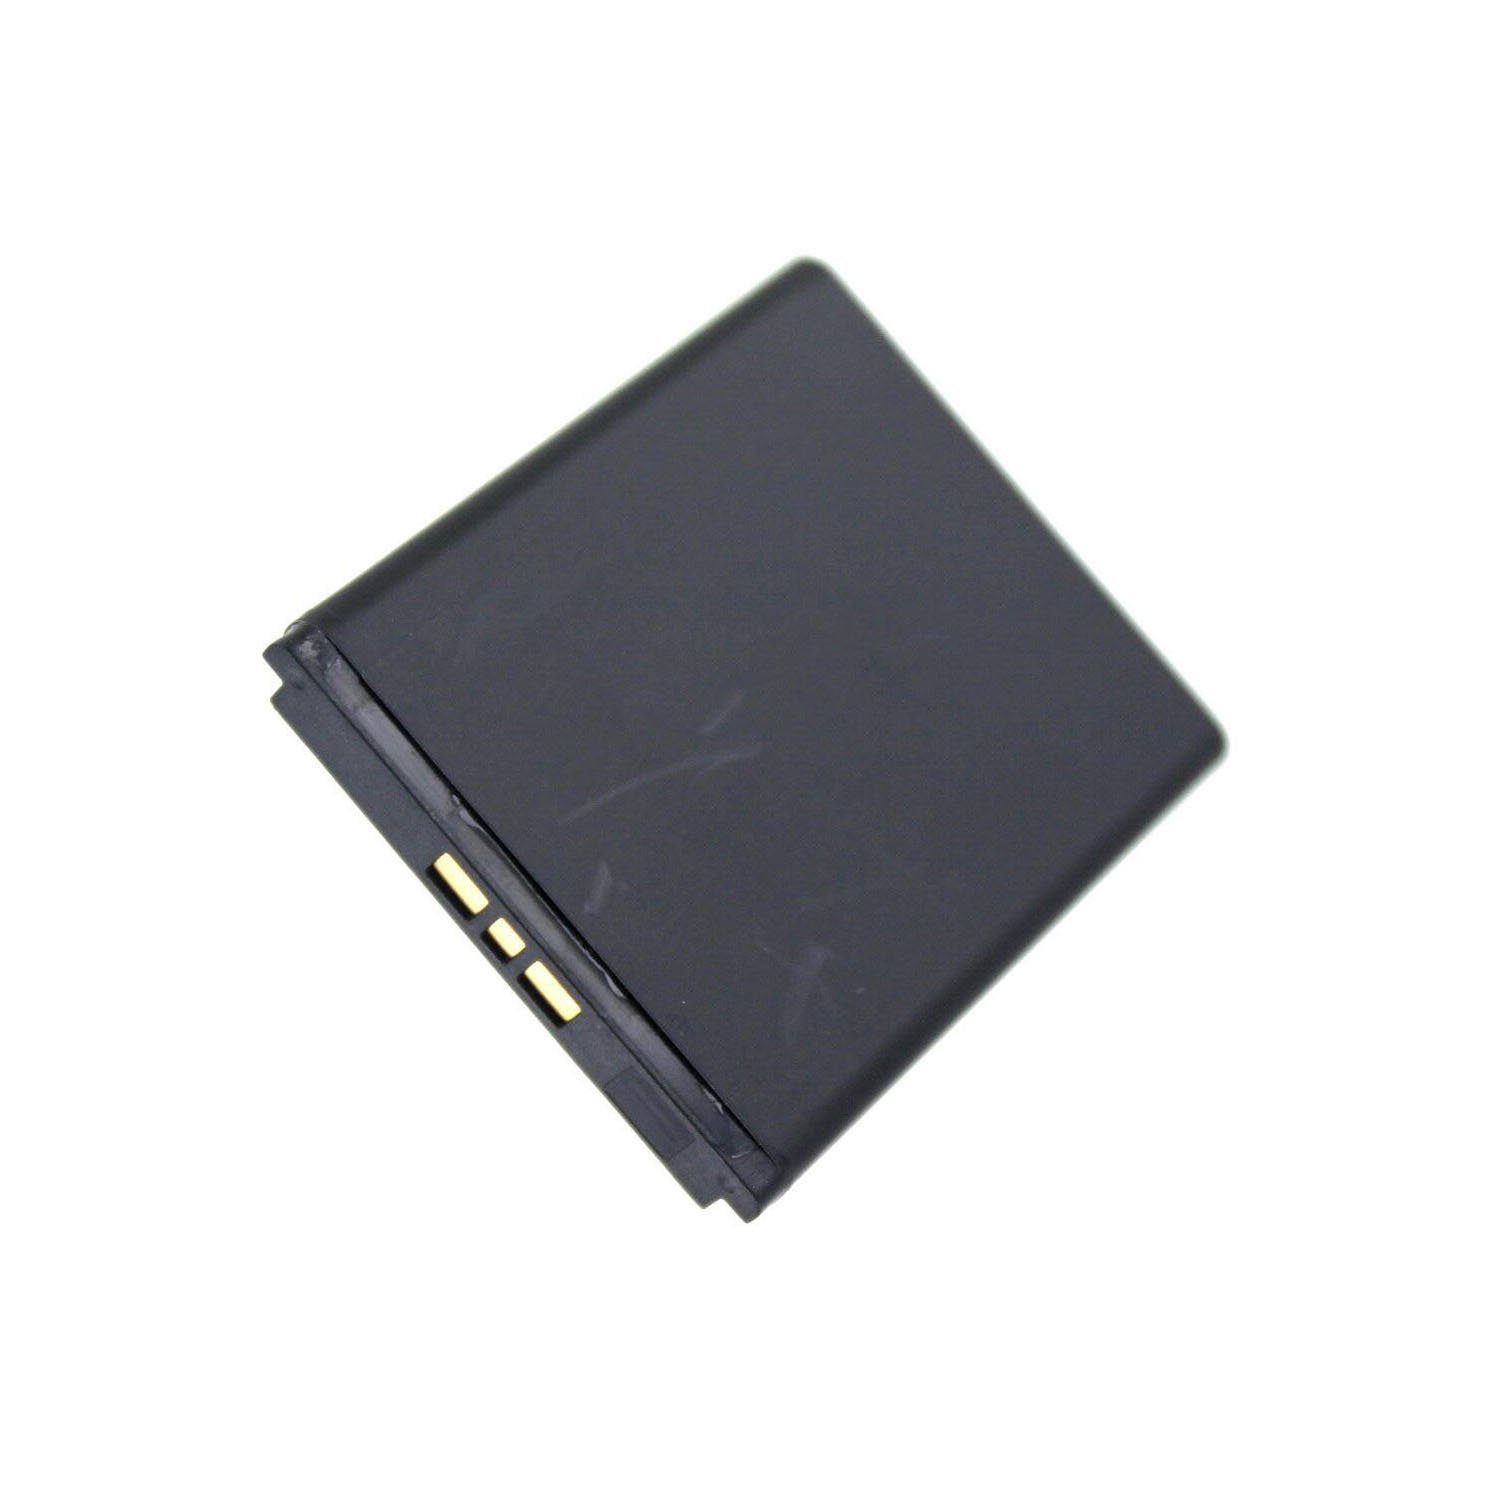 AGI Akku kompatibel mit Sony Ericsson C903 Akku Akku